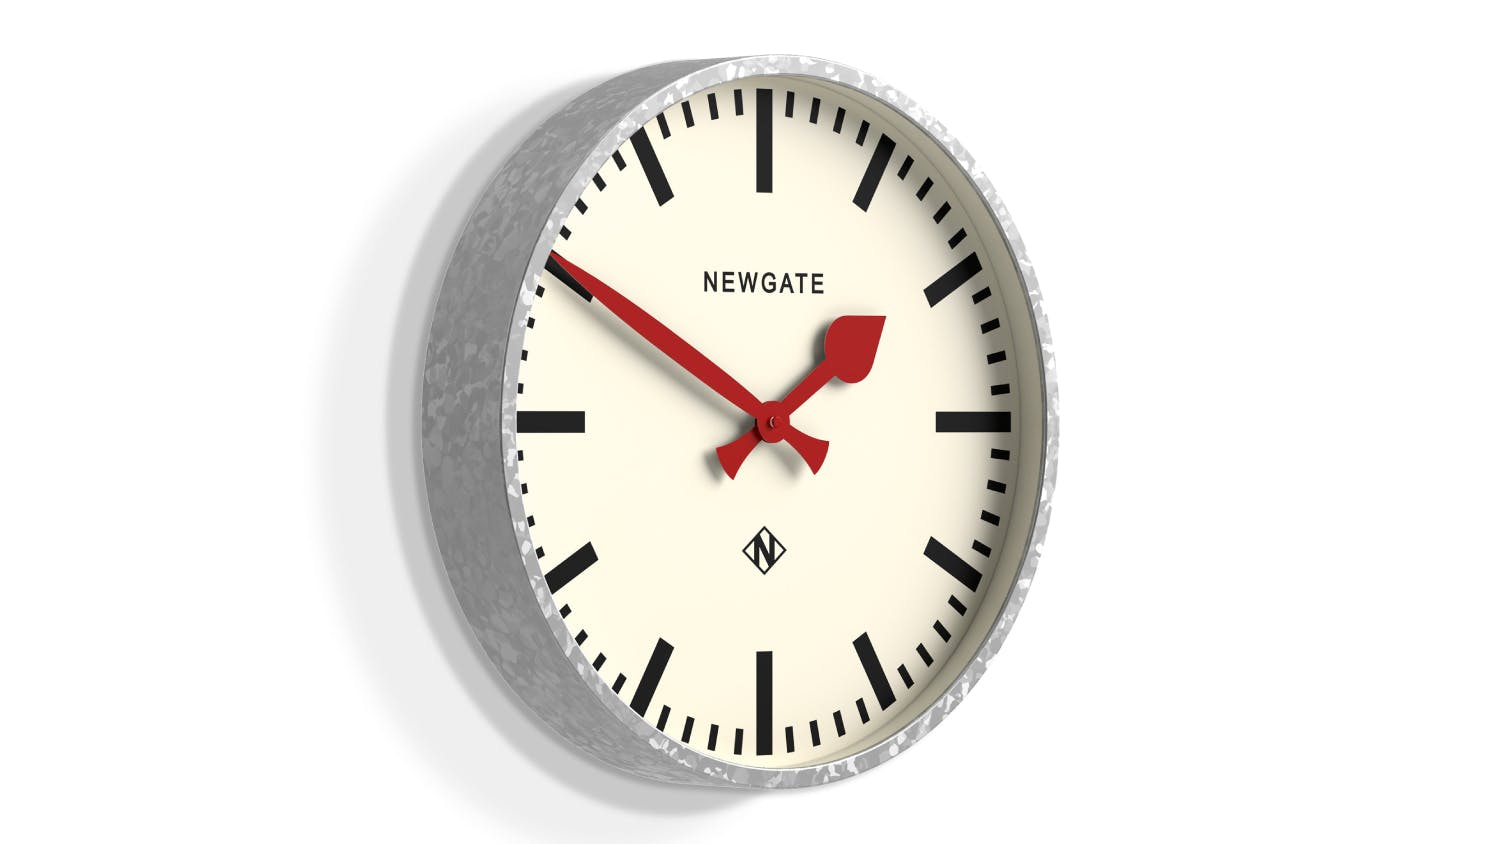 Newgate "Universal Railway" Wall Clock - Galvanised